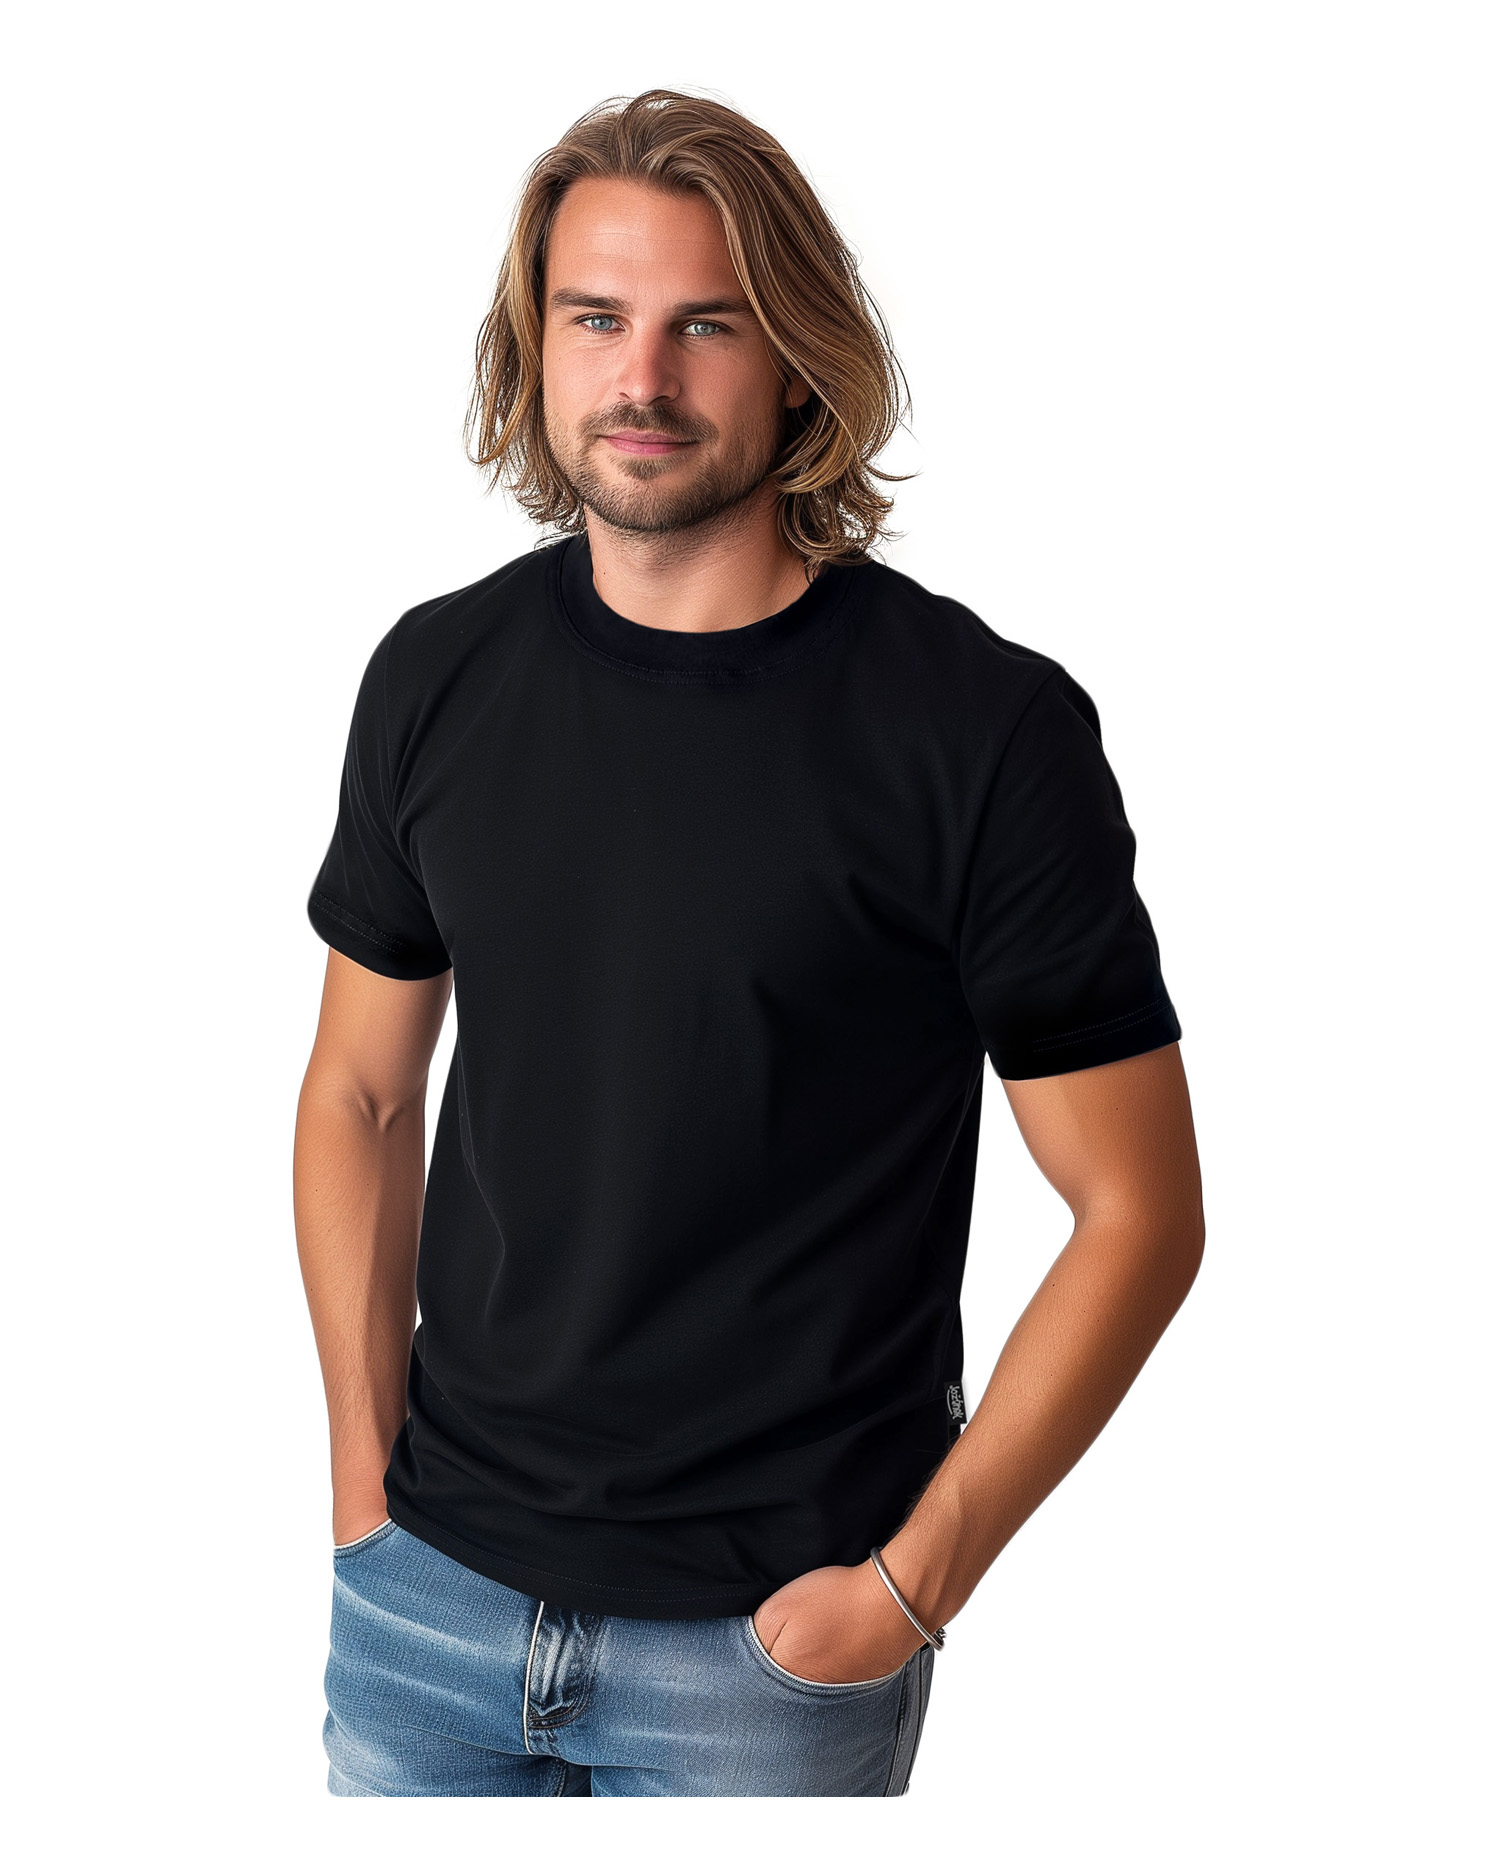 Men’s T-shirt Marek, short sleeve, black